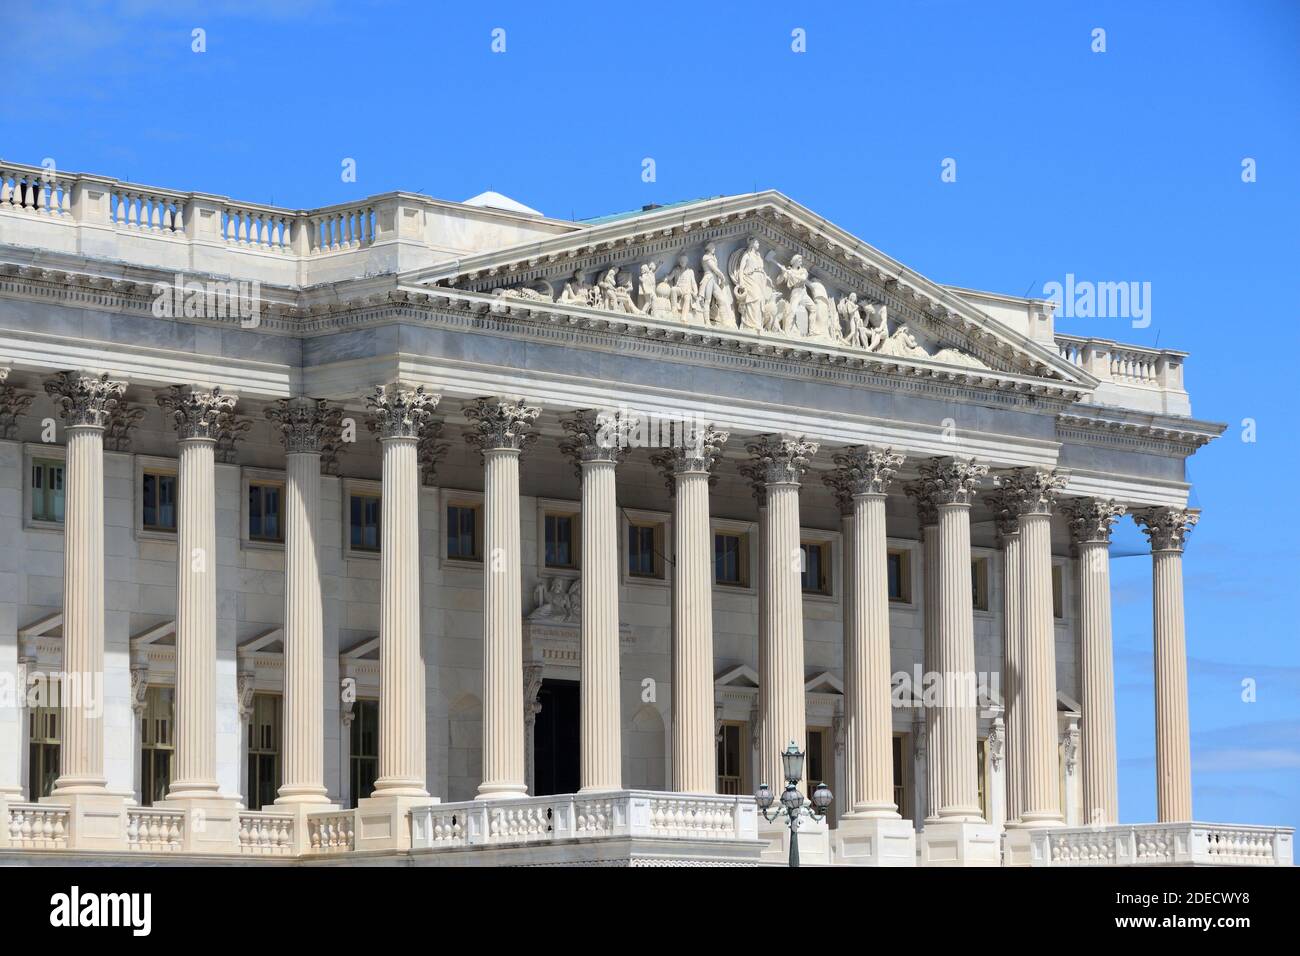 US National Capitol in Washington, DC. American landmark. United States Capitol - US Senate. Stock Photo